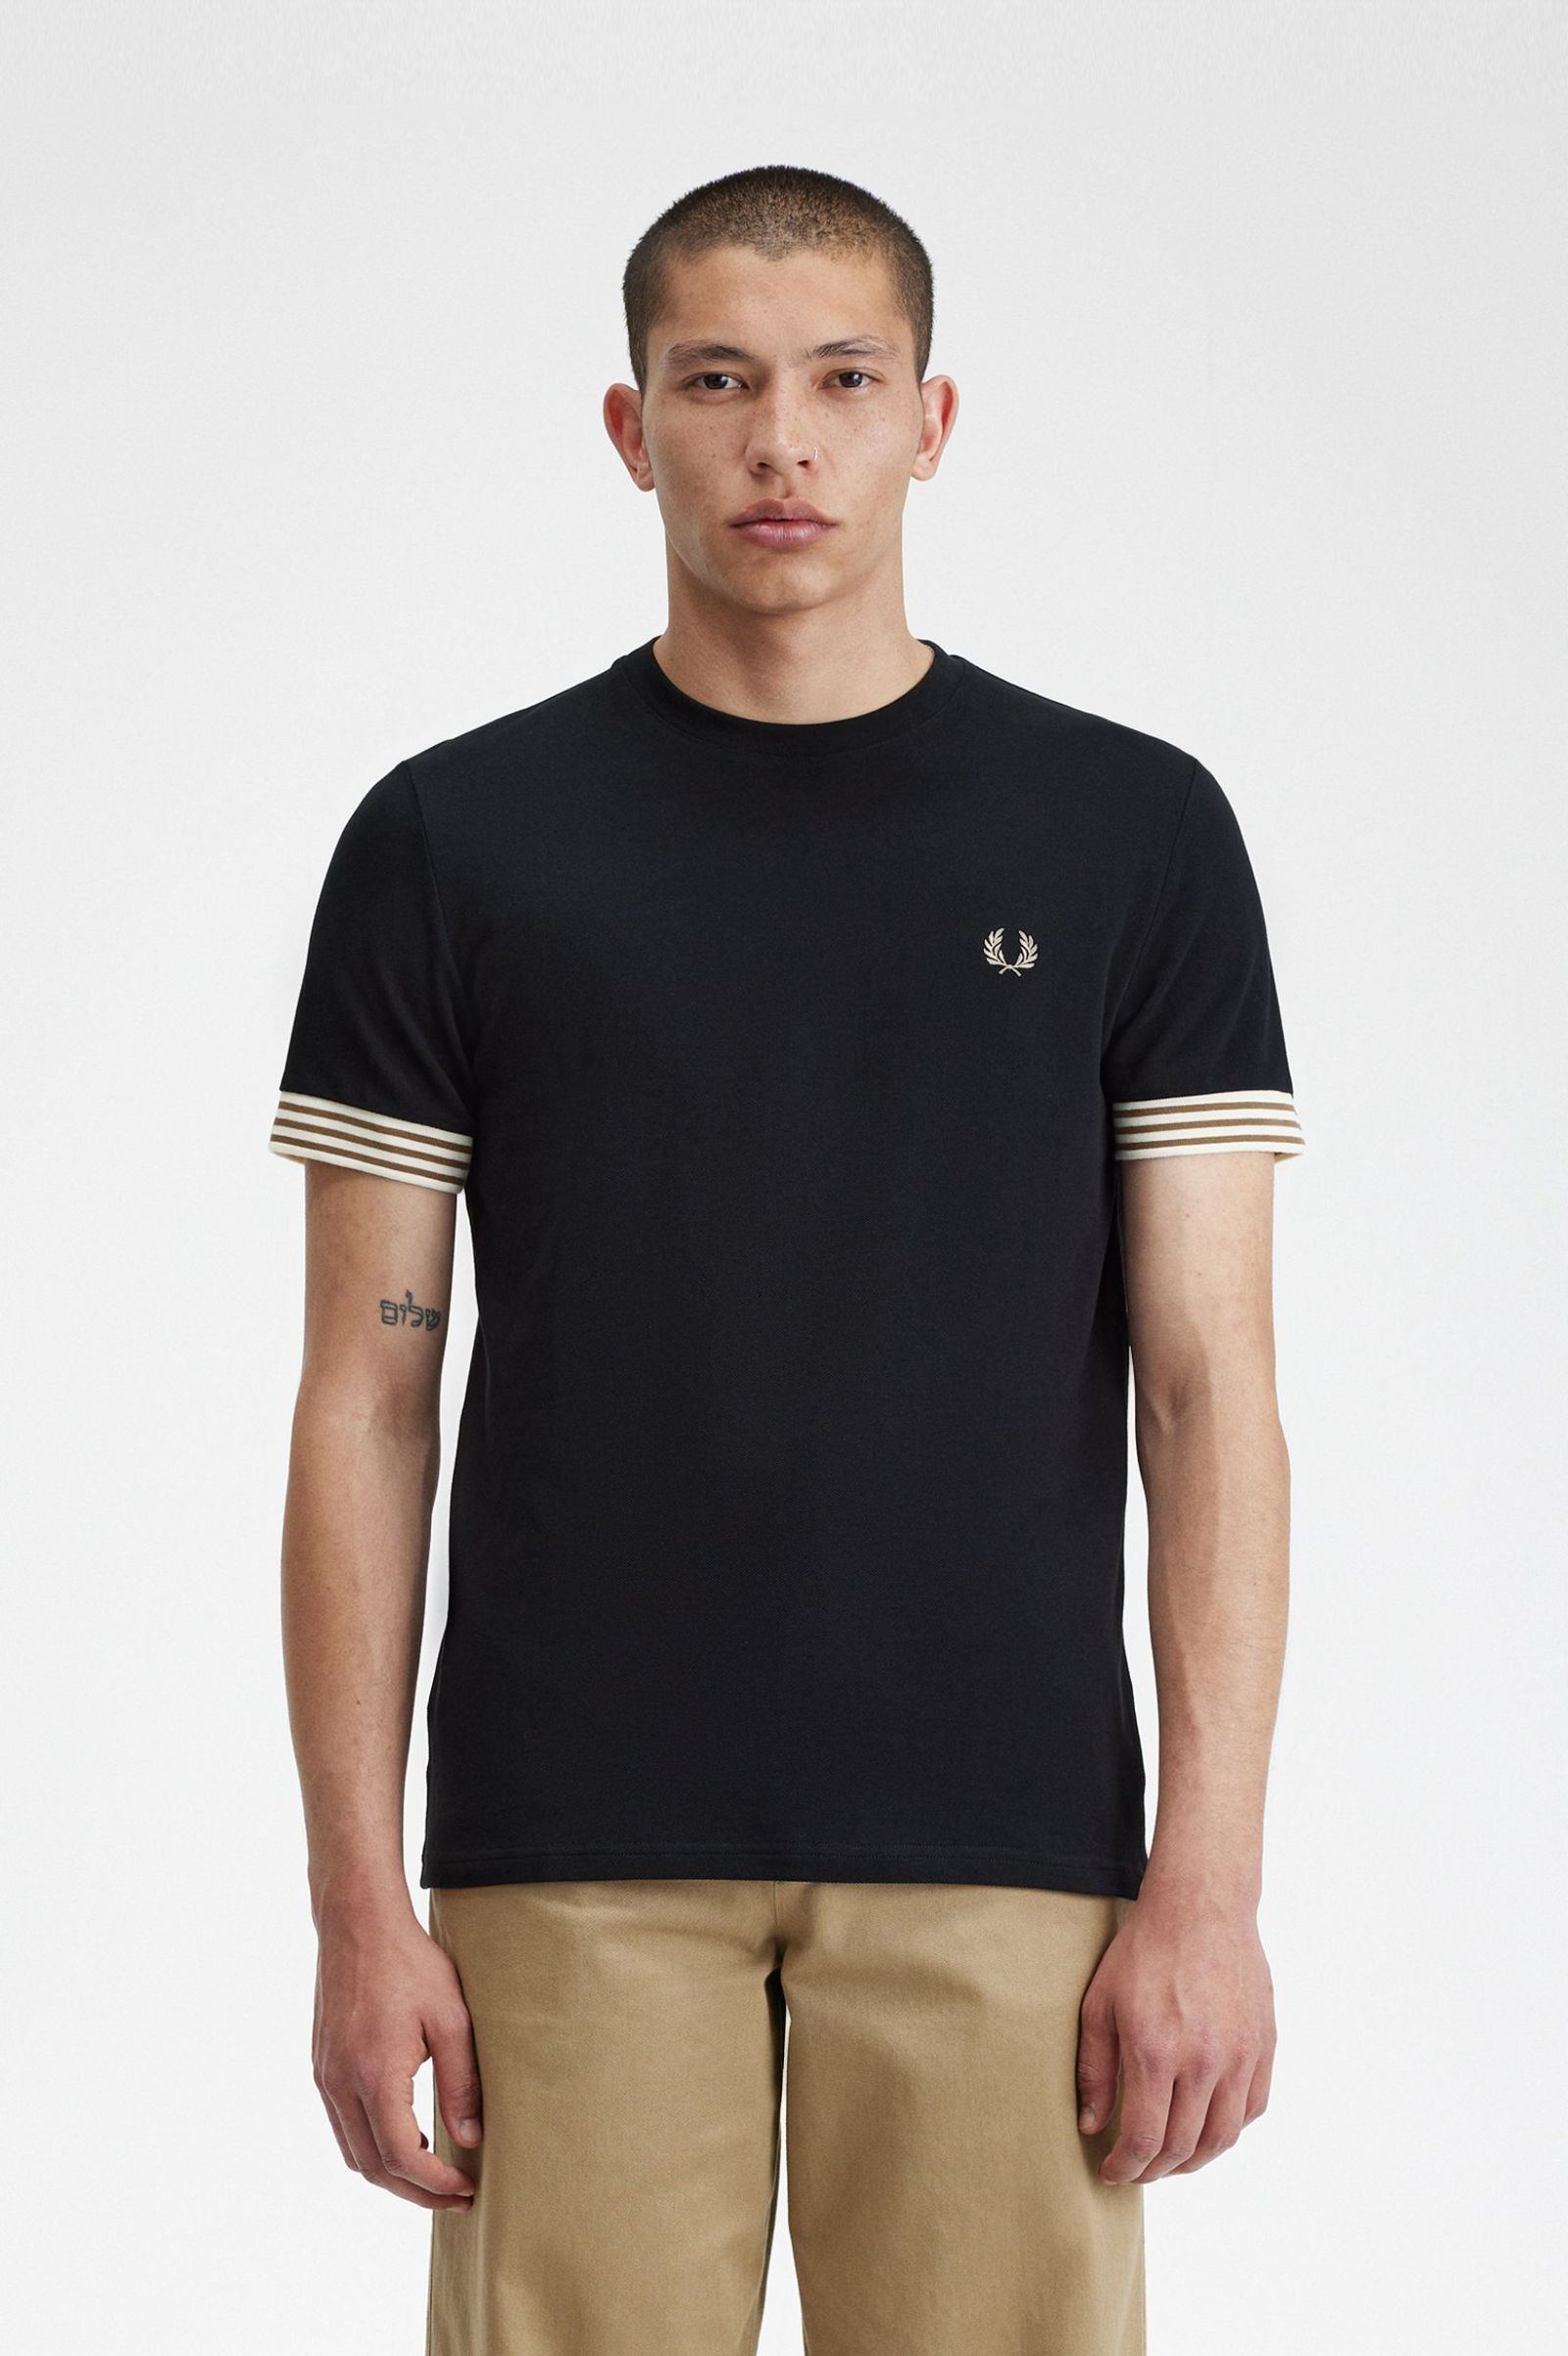 Striped Cuff T-Shirt - Black | Men's T-Shirts | Designer T-Shirts for ...